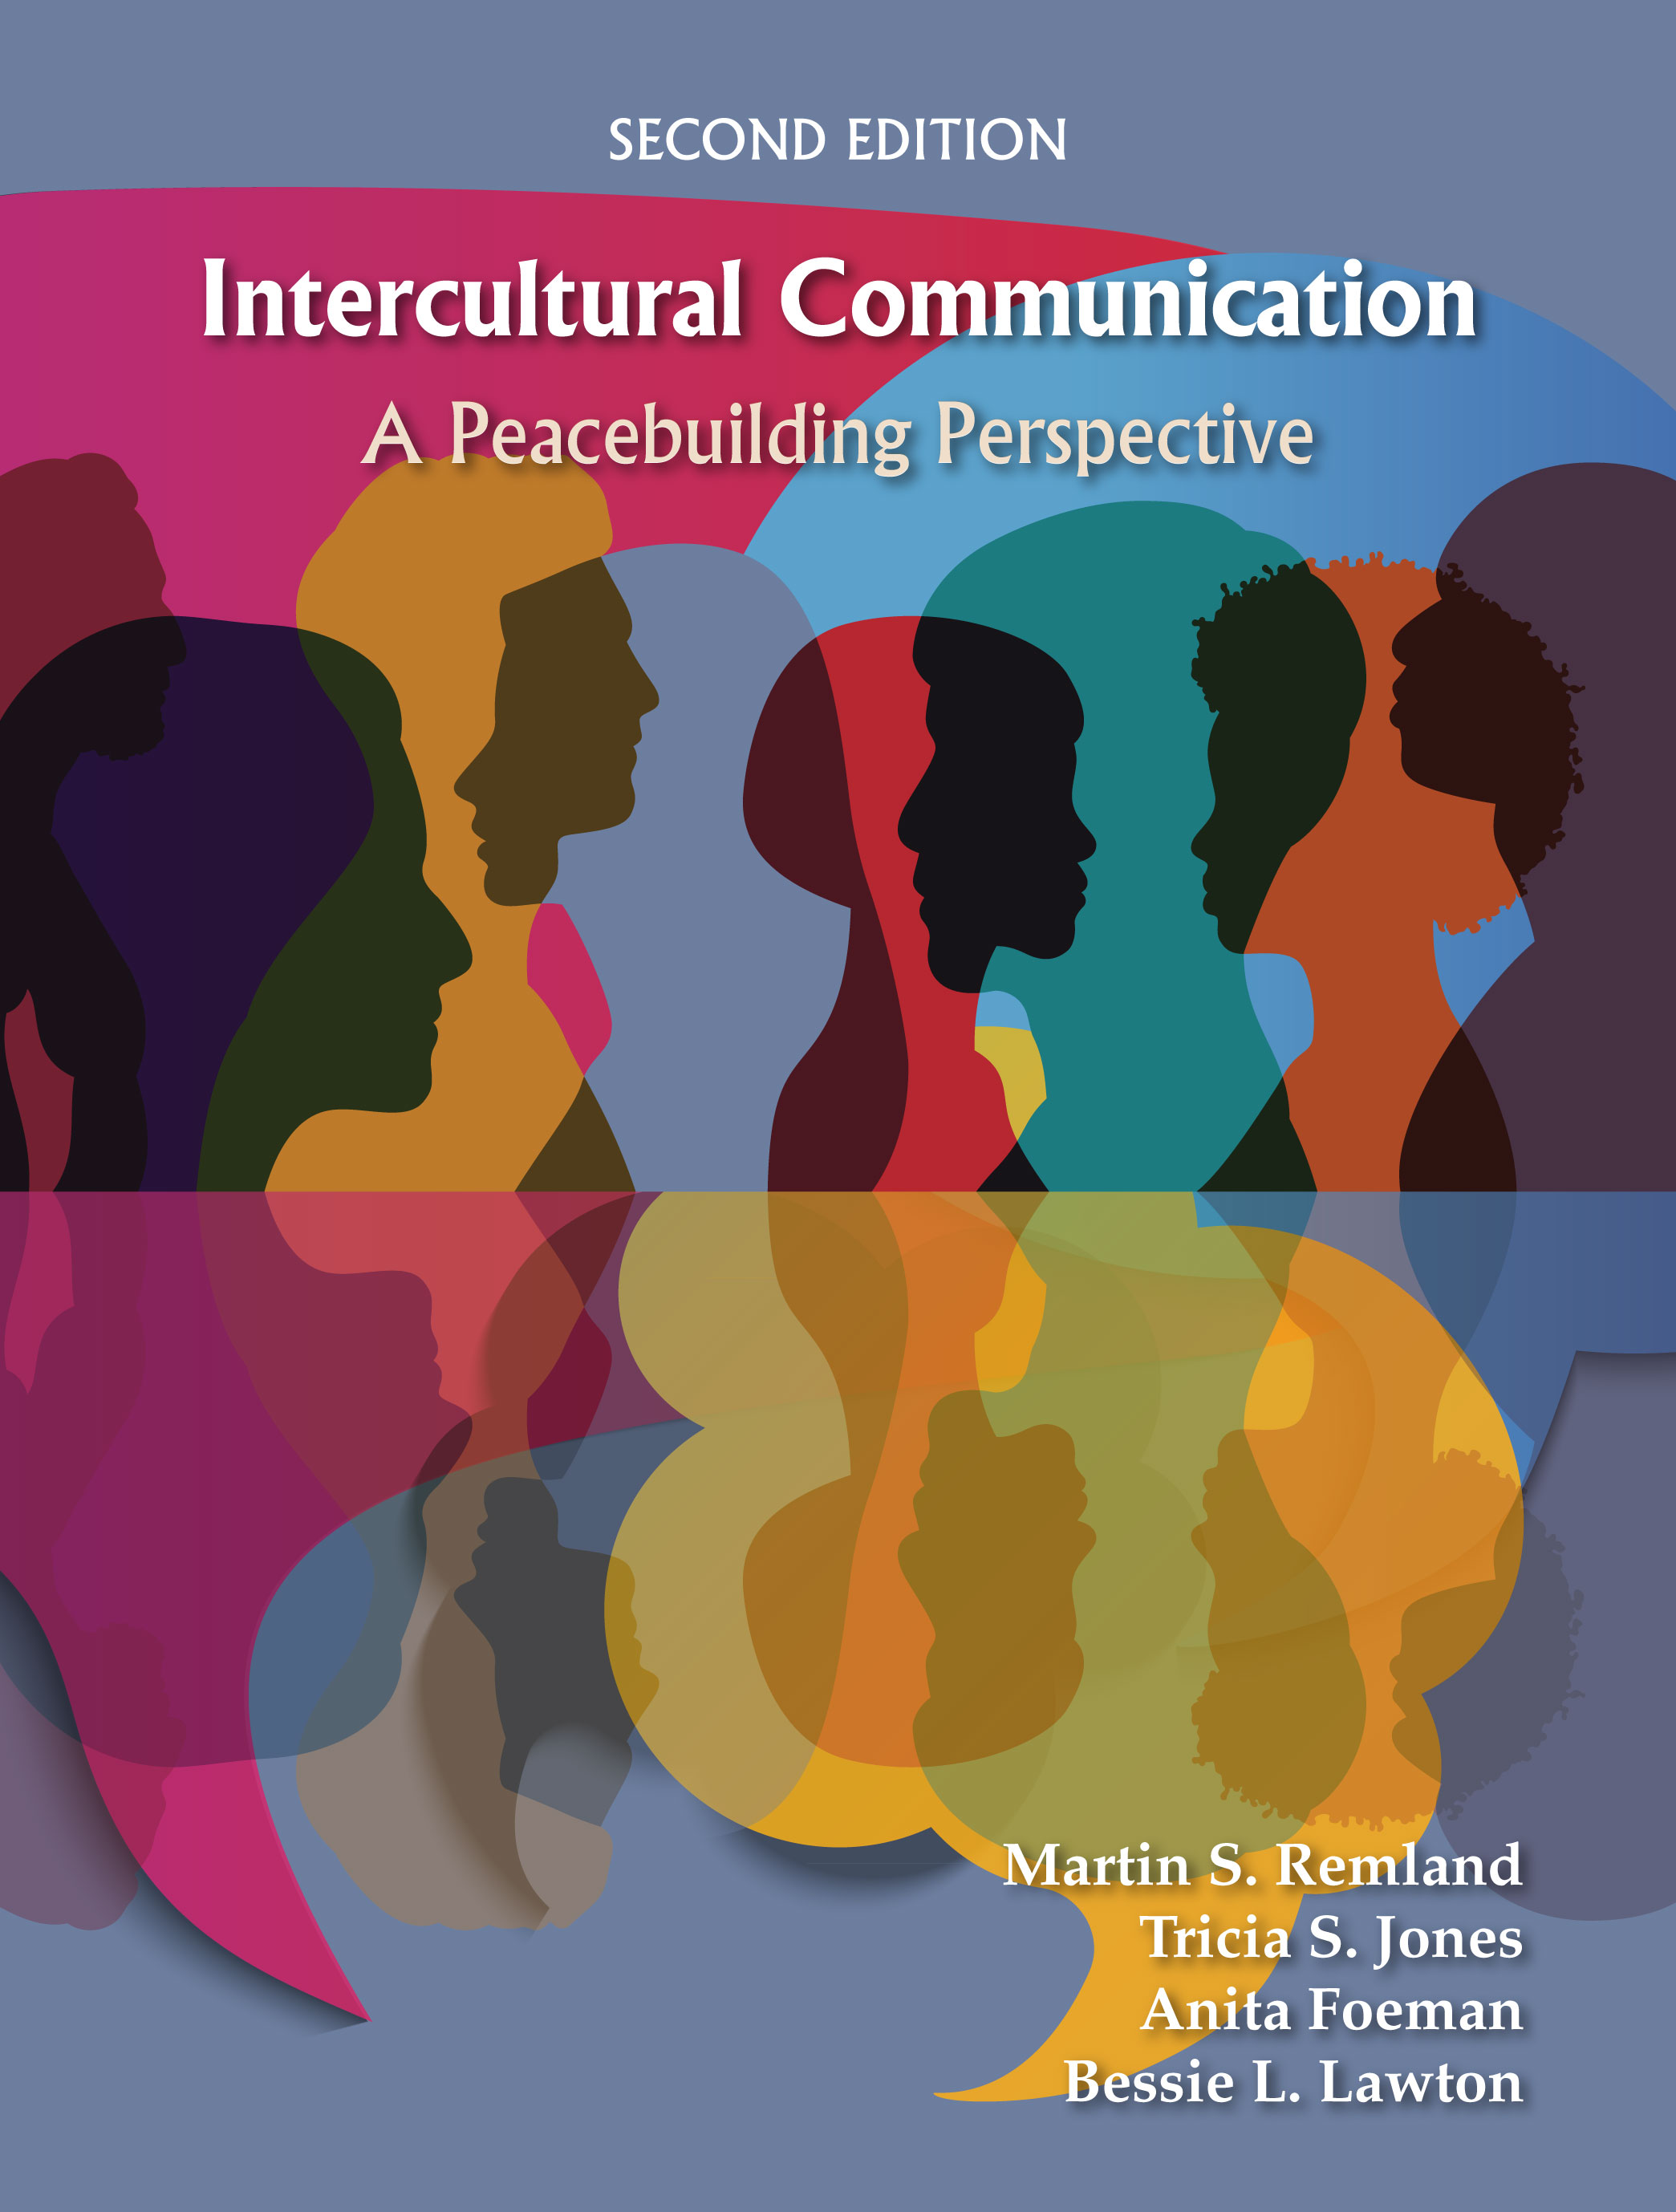 Intercultural Communication: A Peacebuilding Perspective, Second Edition by Martin S. Remland, Tricia S. Jones, Anita  Foeman, Bessie L. Lawton